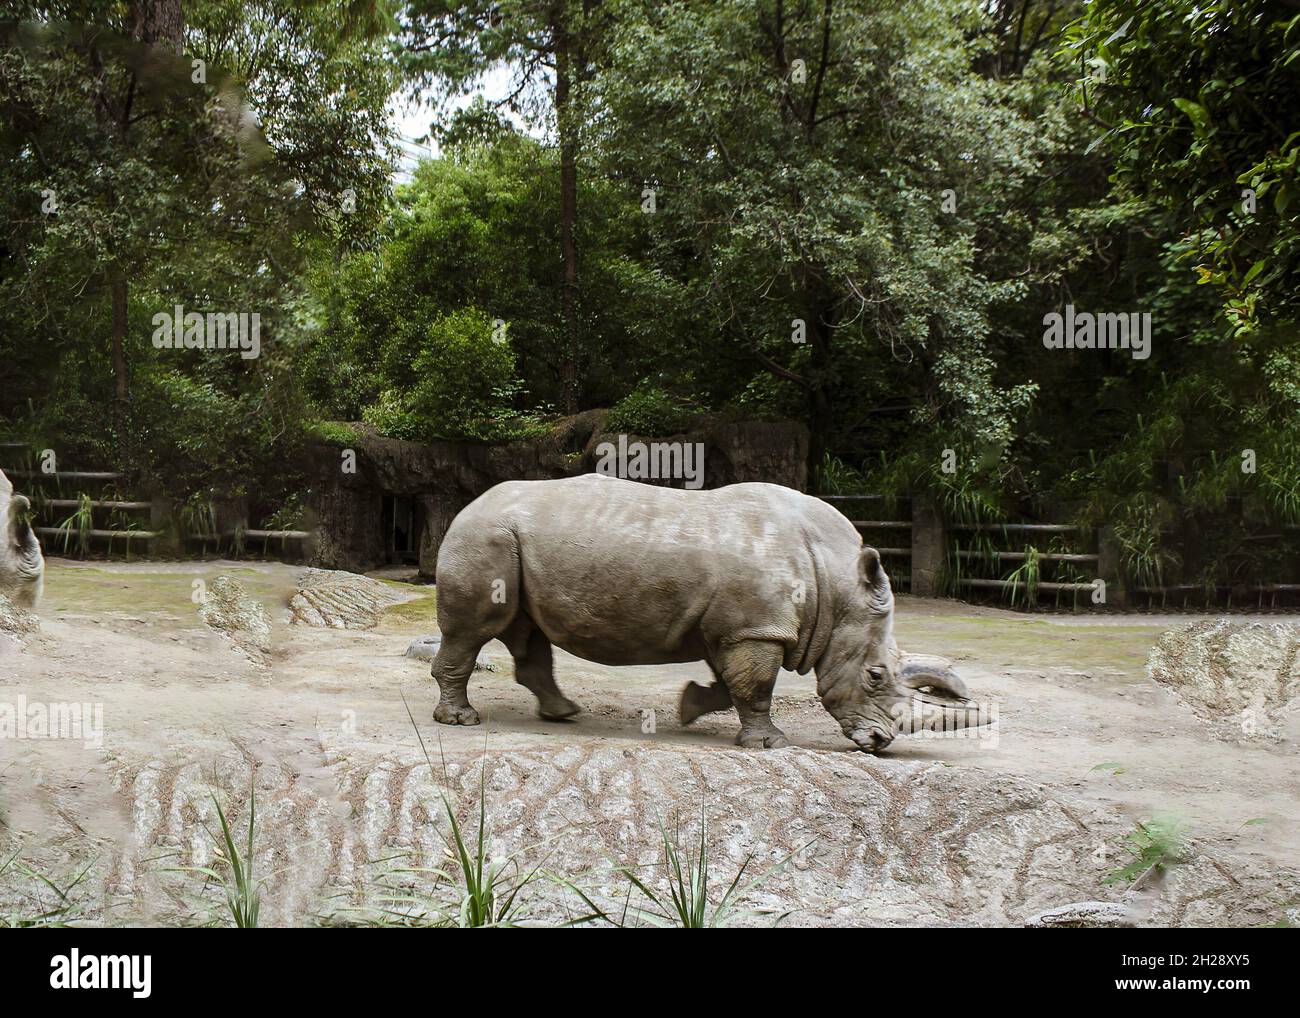 Rhinoceros walking in the zoo Stock Photo